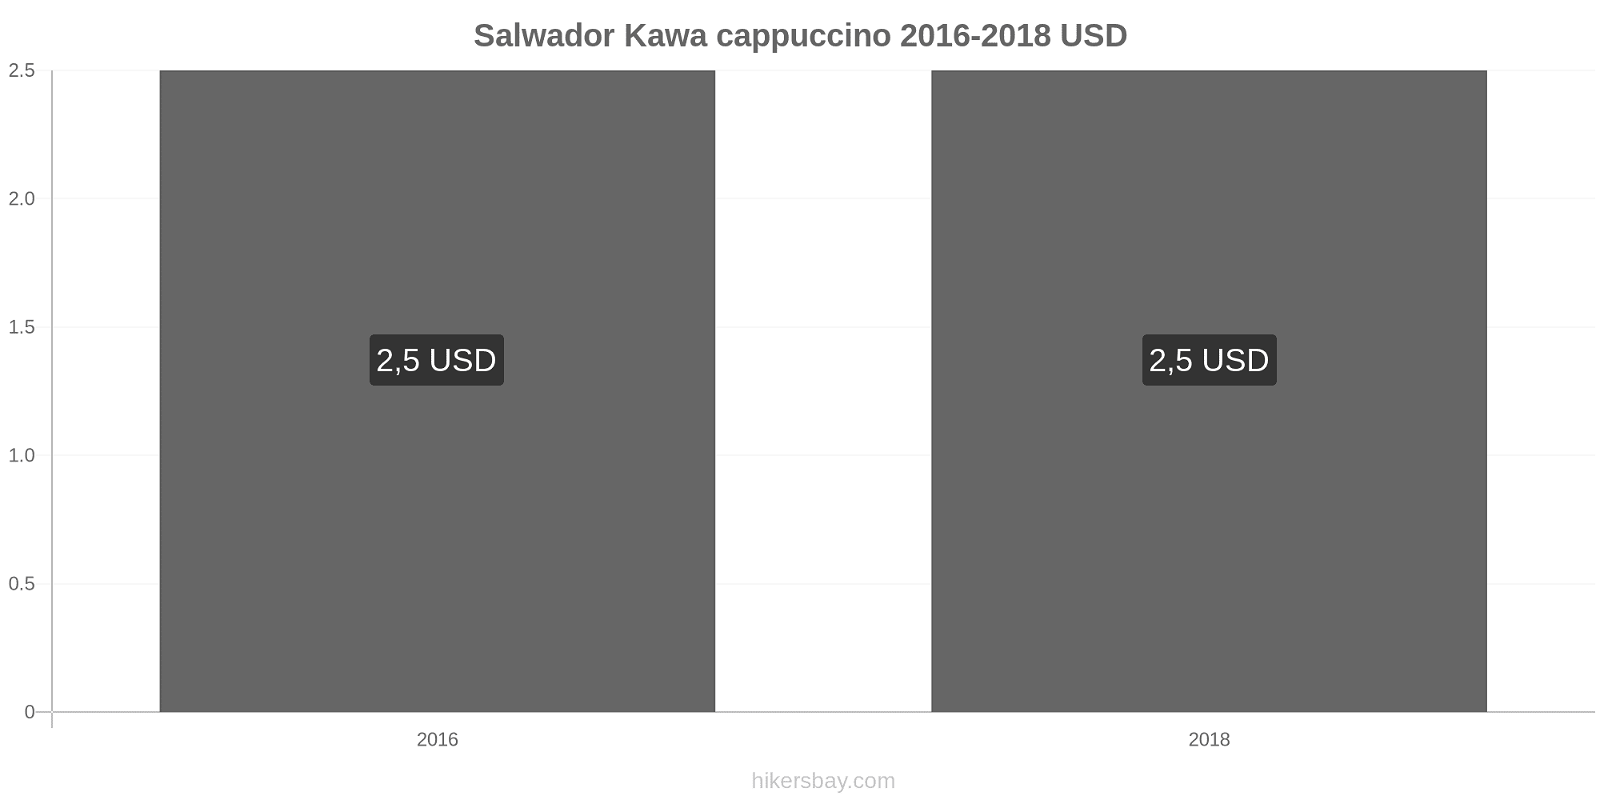 Salwador zmiany cen Kawa cappuccino hikersbay.com